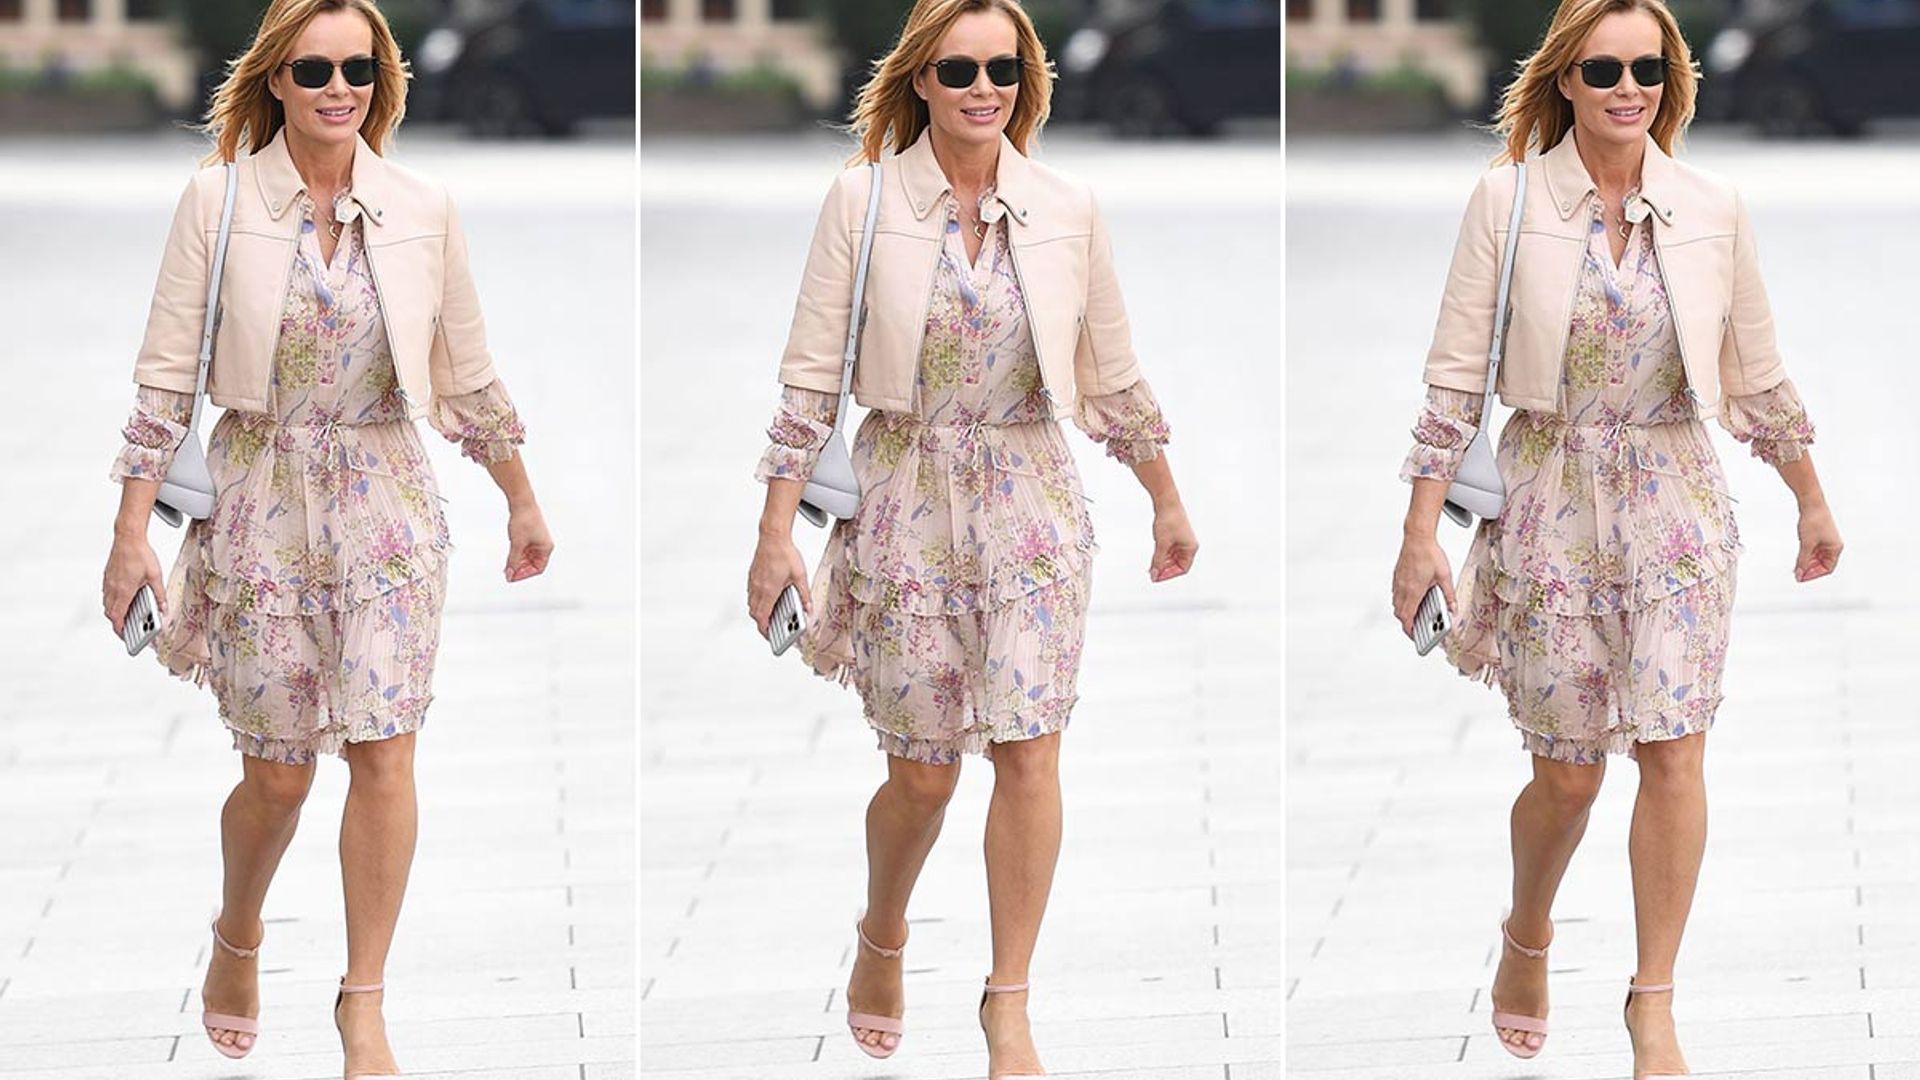 Amanda Holden's £245 sheer mini dress is a spring dream